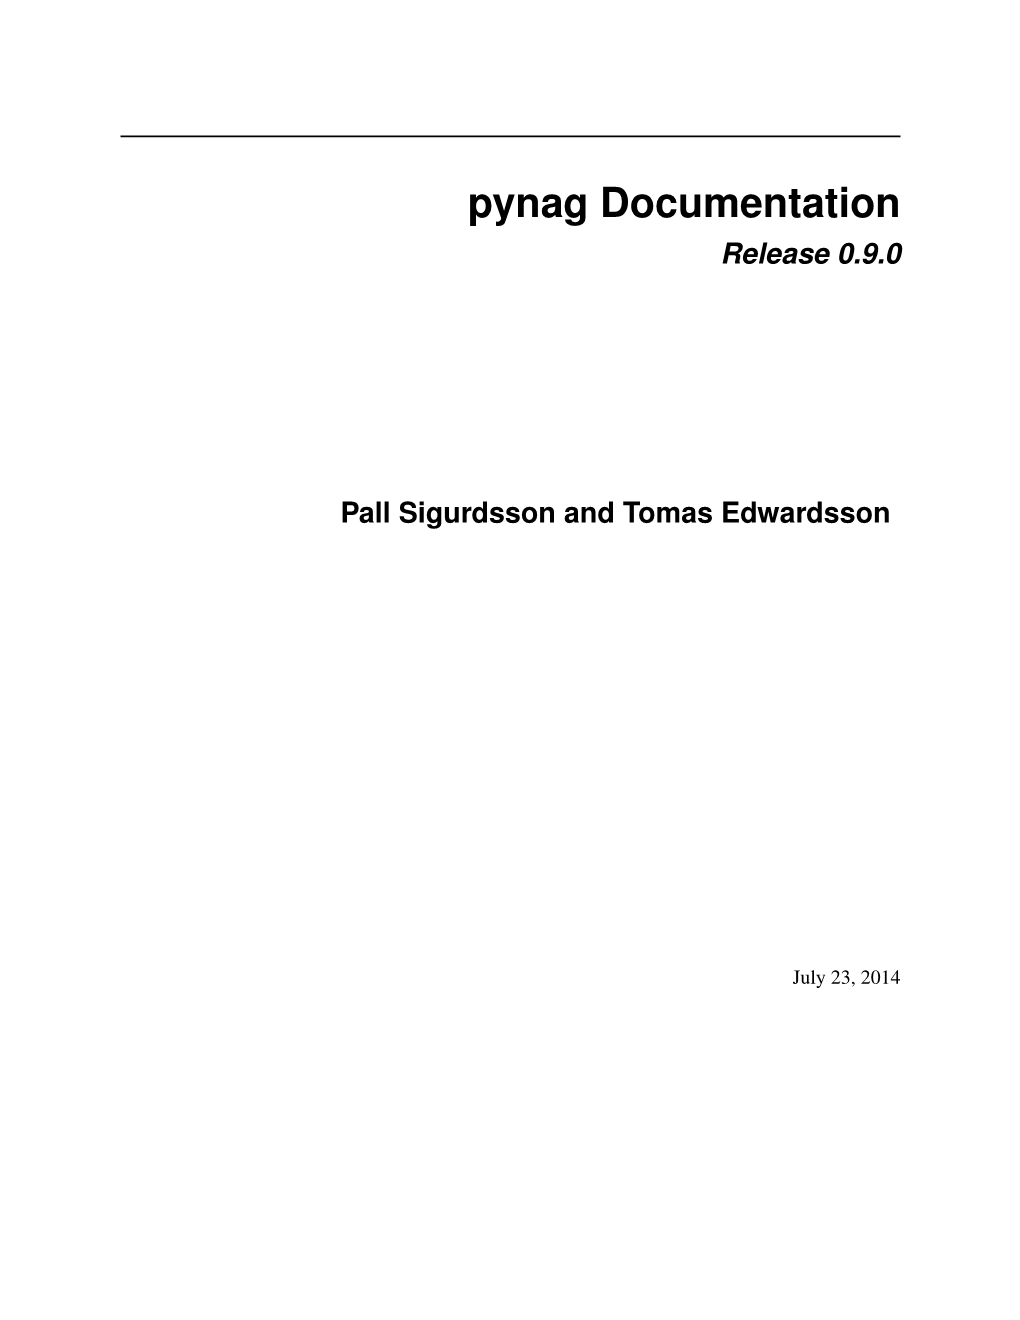 Pynag Documentation Release 0.9.0